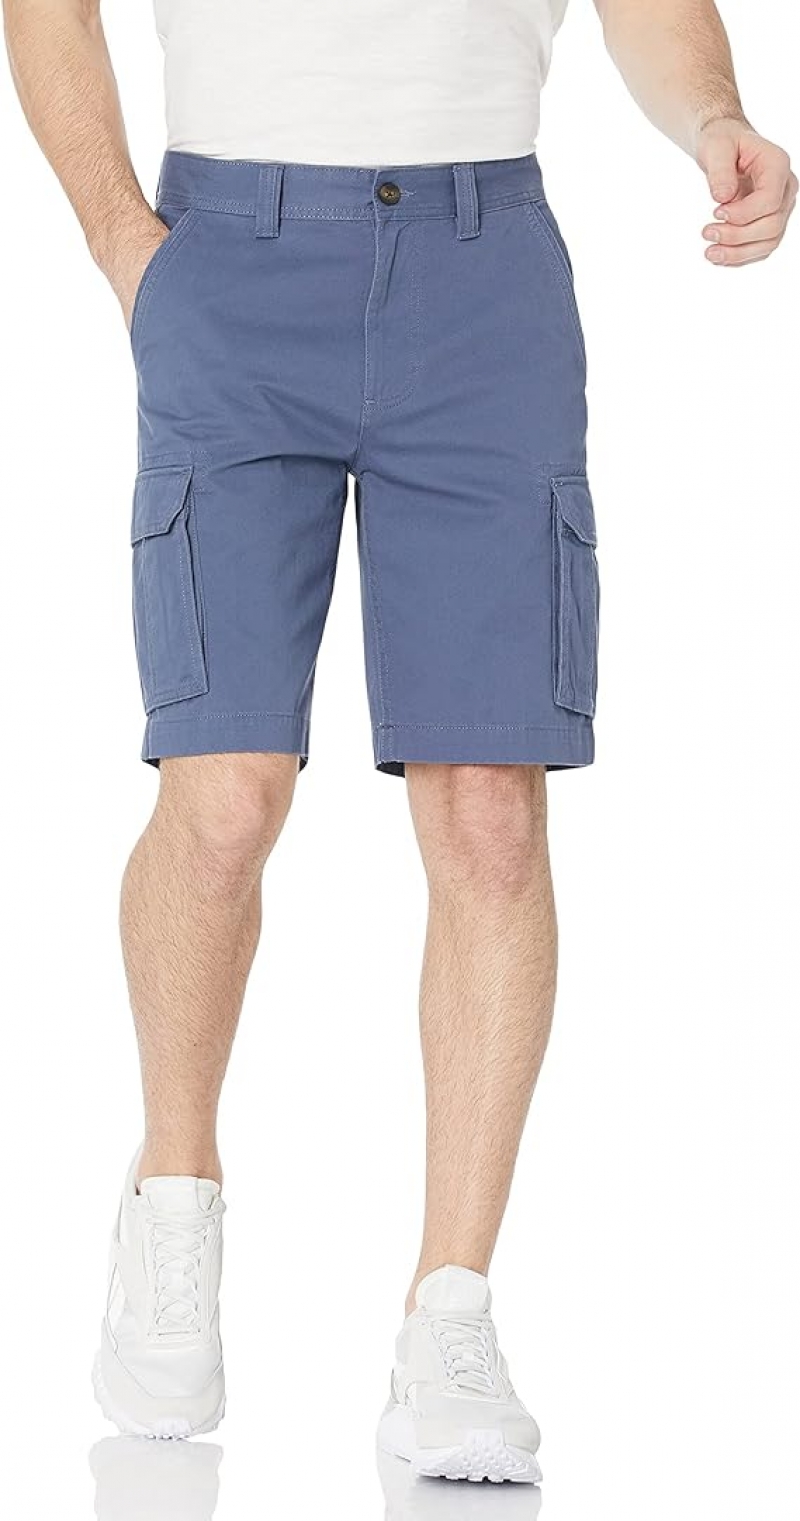 ihocon: [Amazon自家品牌] Amazon Essentials Men's Classic-Fit Cargo Short 男士工装短裤